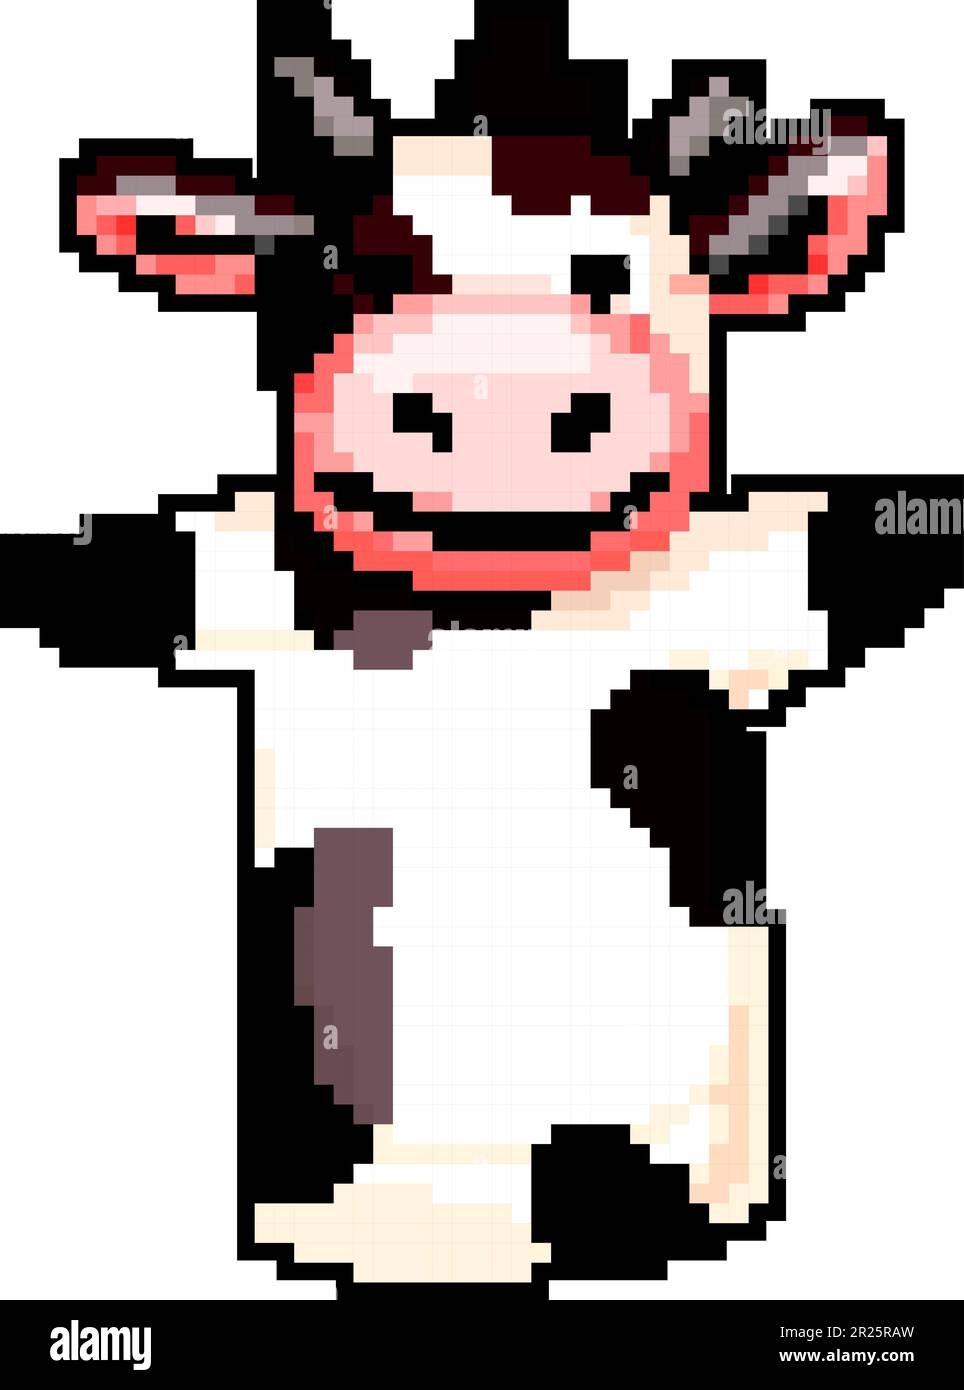 cow hand puppet game pixel art vector illustration Stock Vector